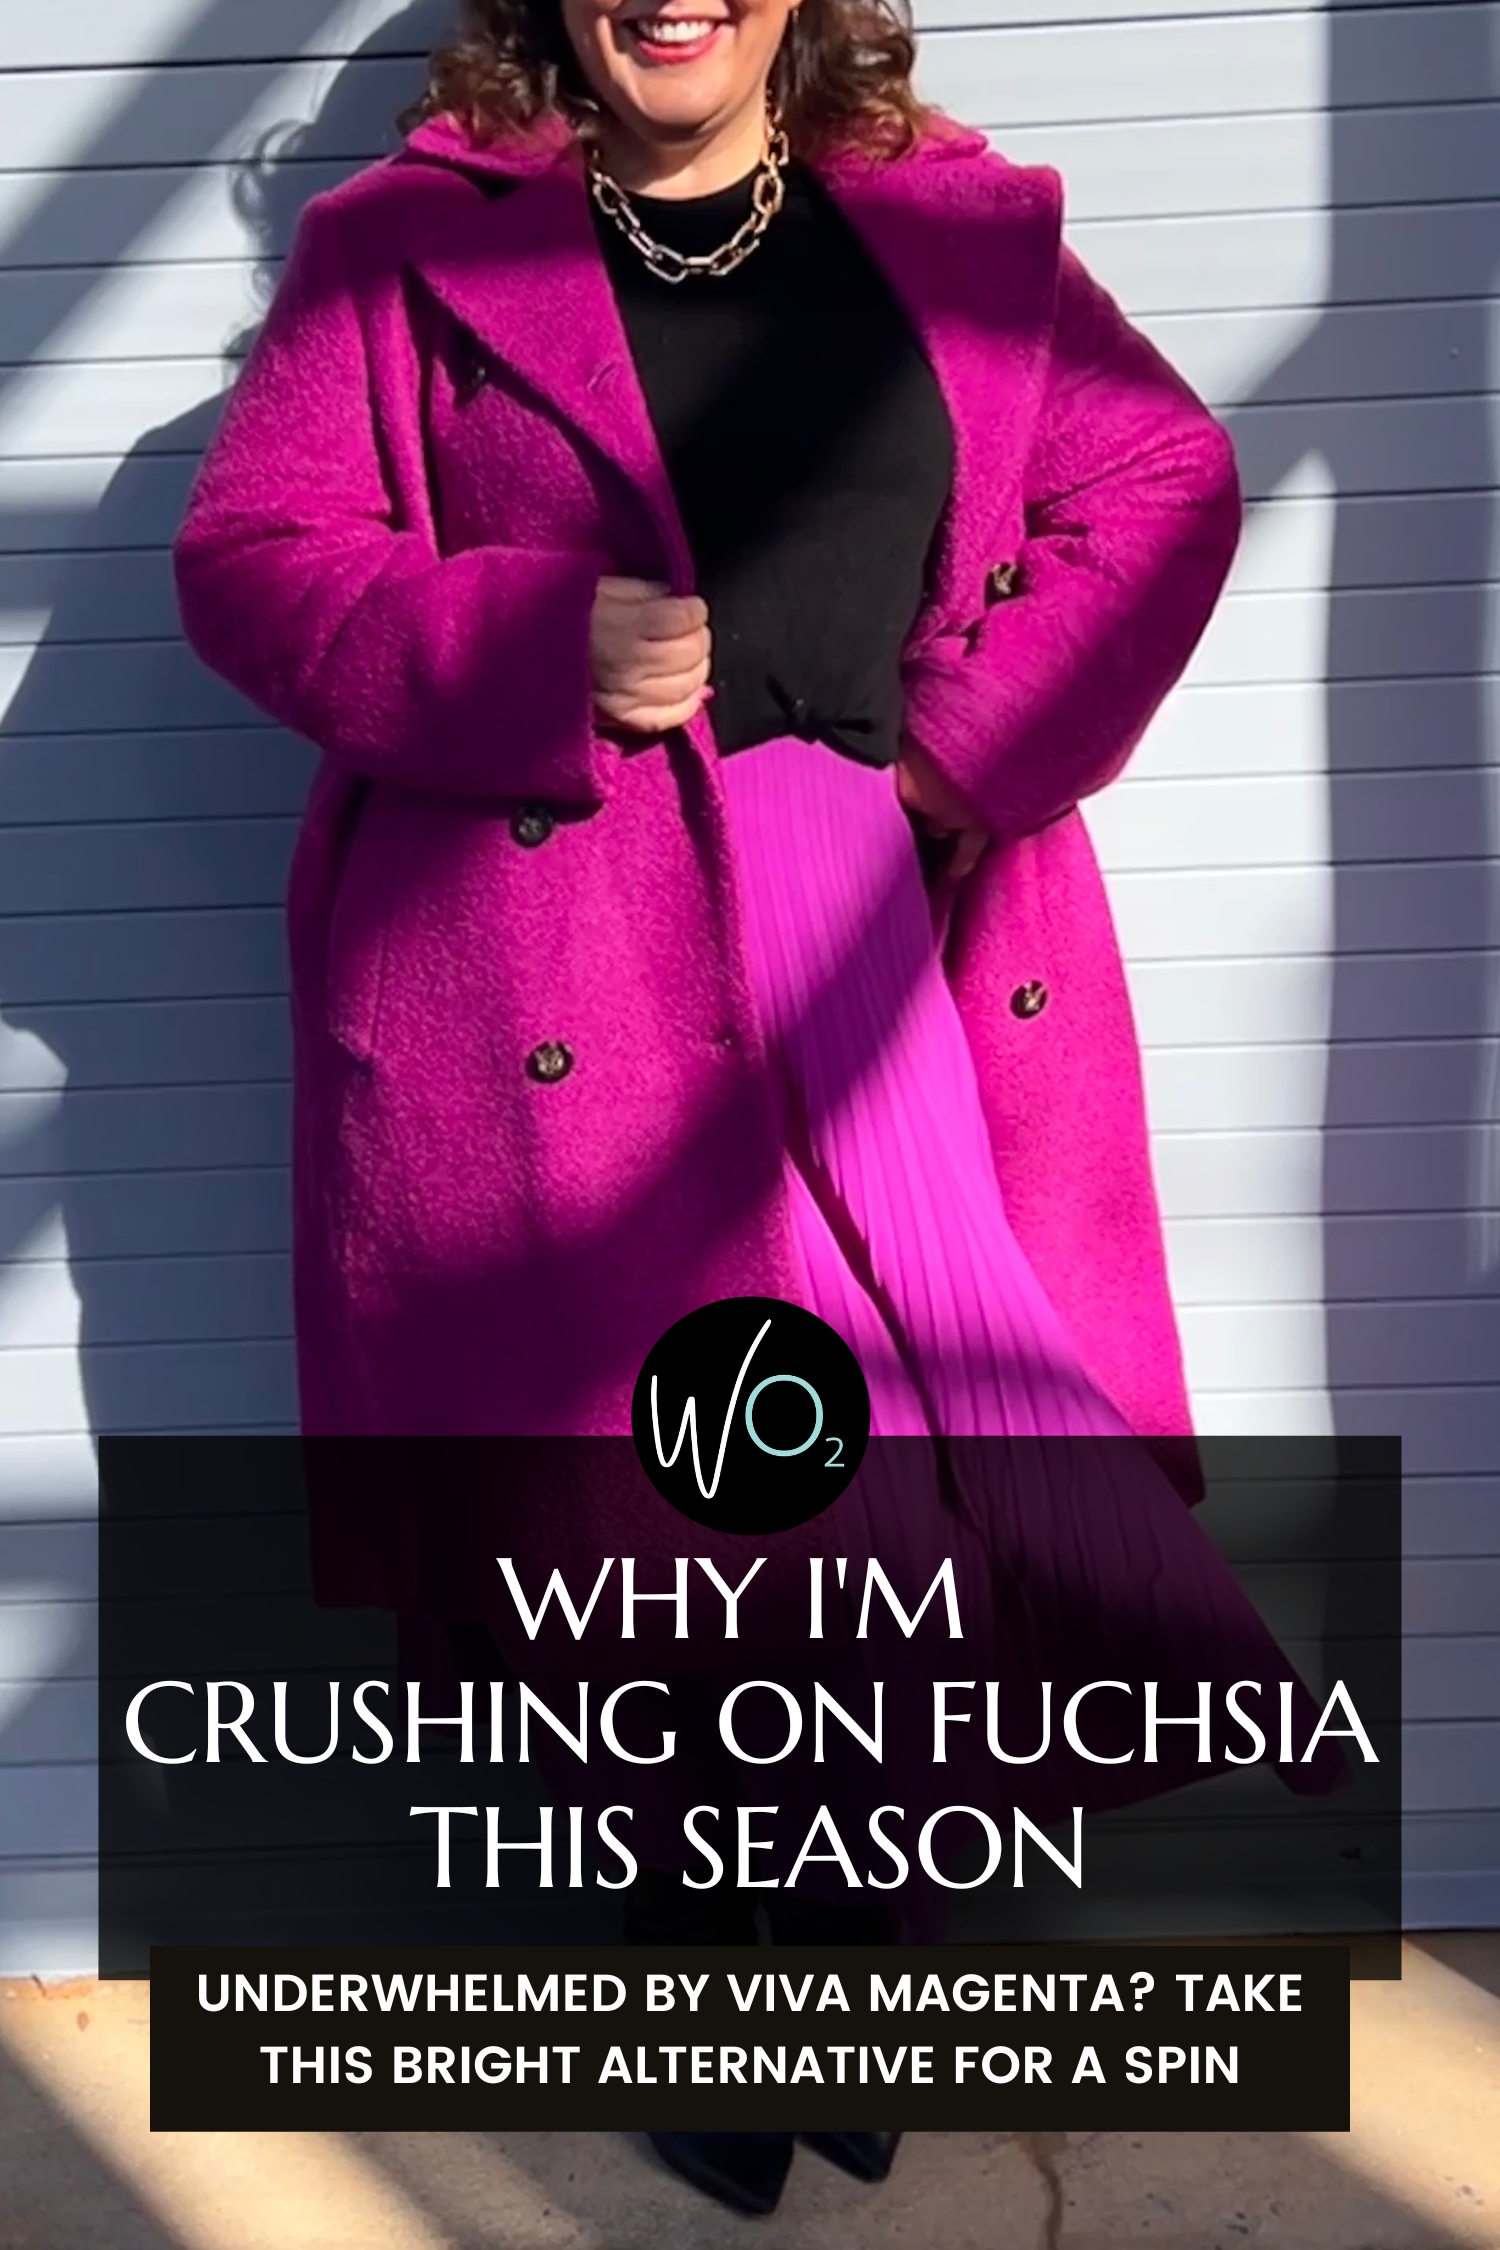 Move Over Viva Magenta, I’m Crushing on Fuchsia